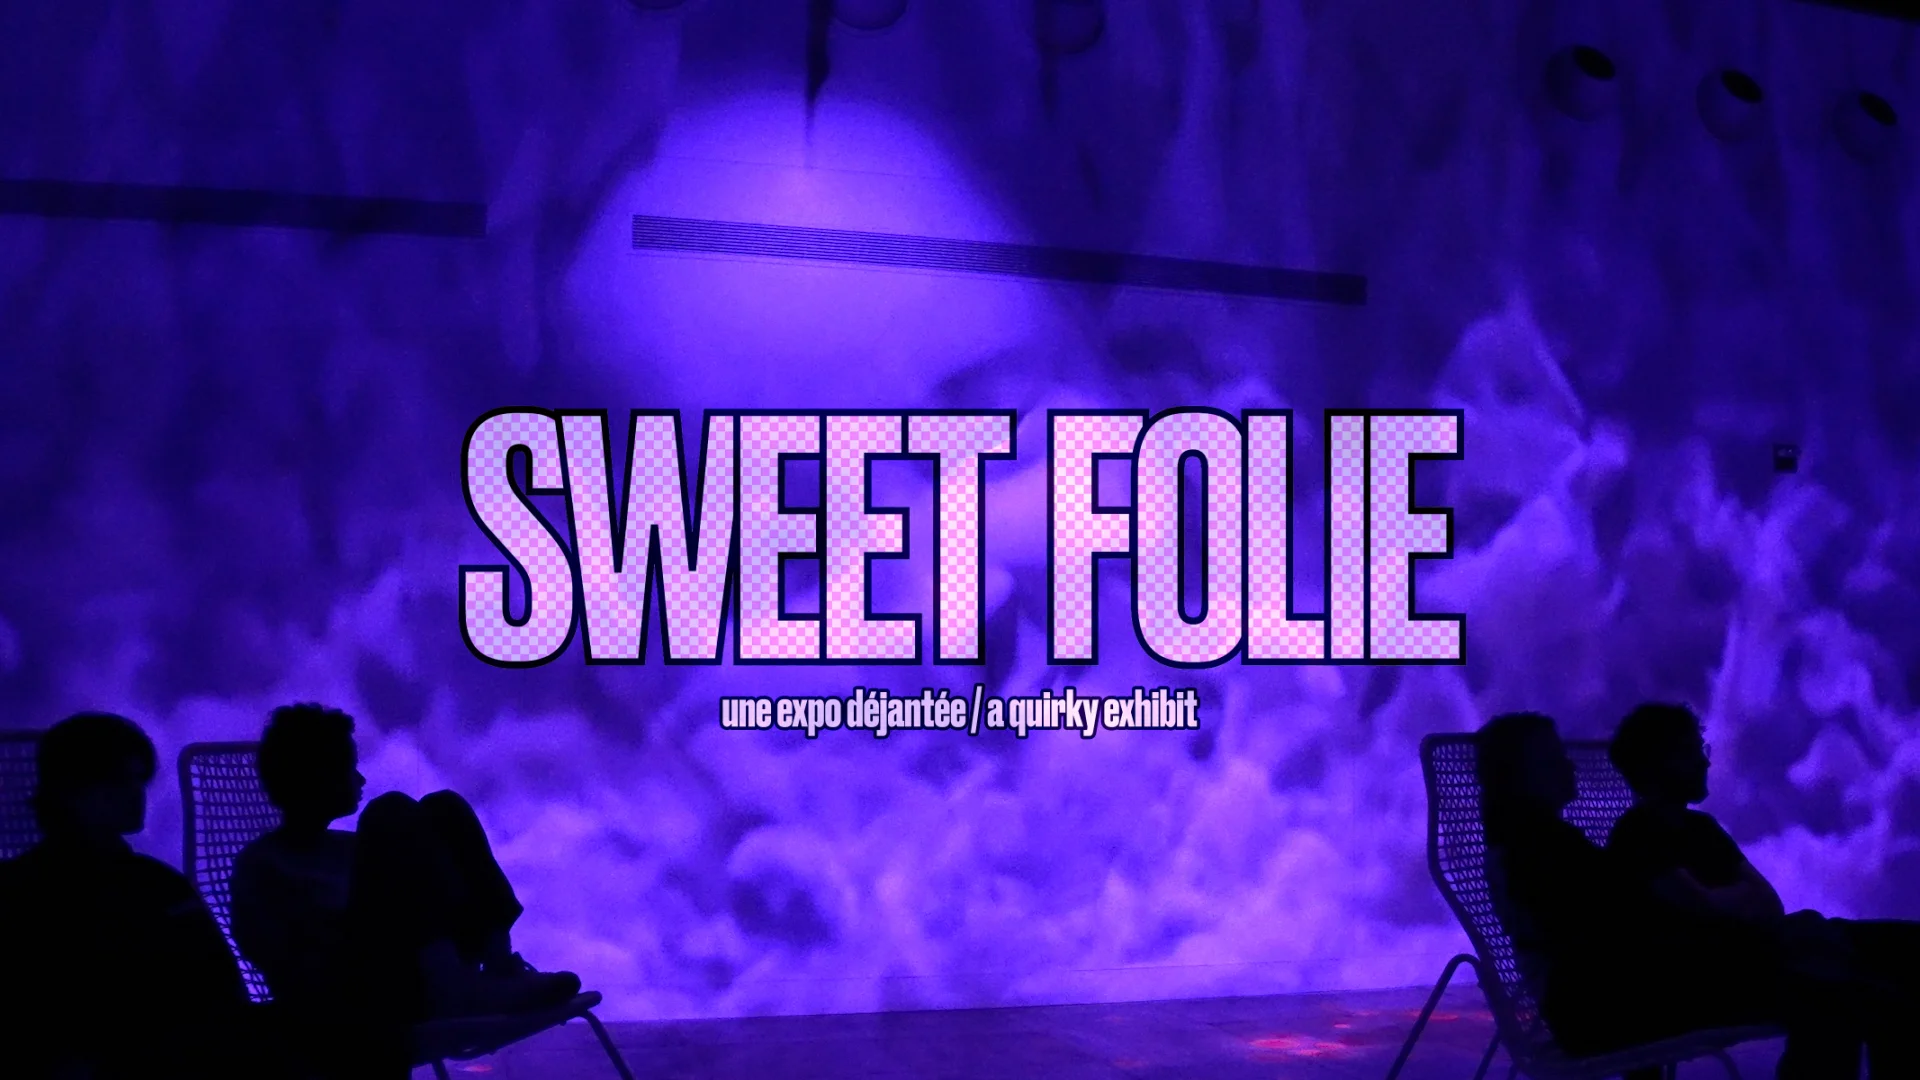 SWEET FOLIE - Teaser (60sec) on Vimeo